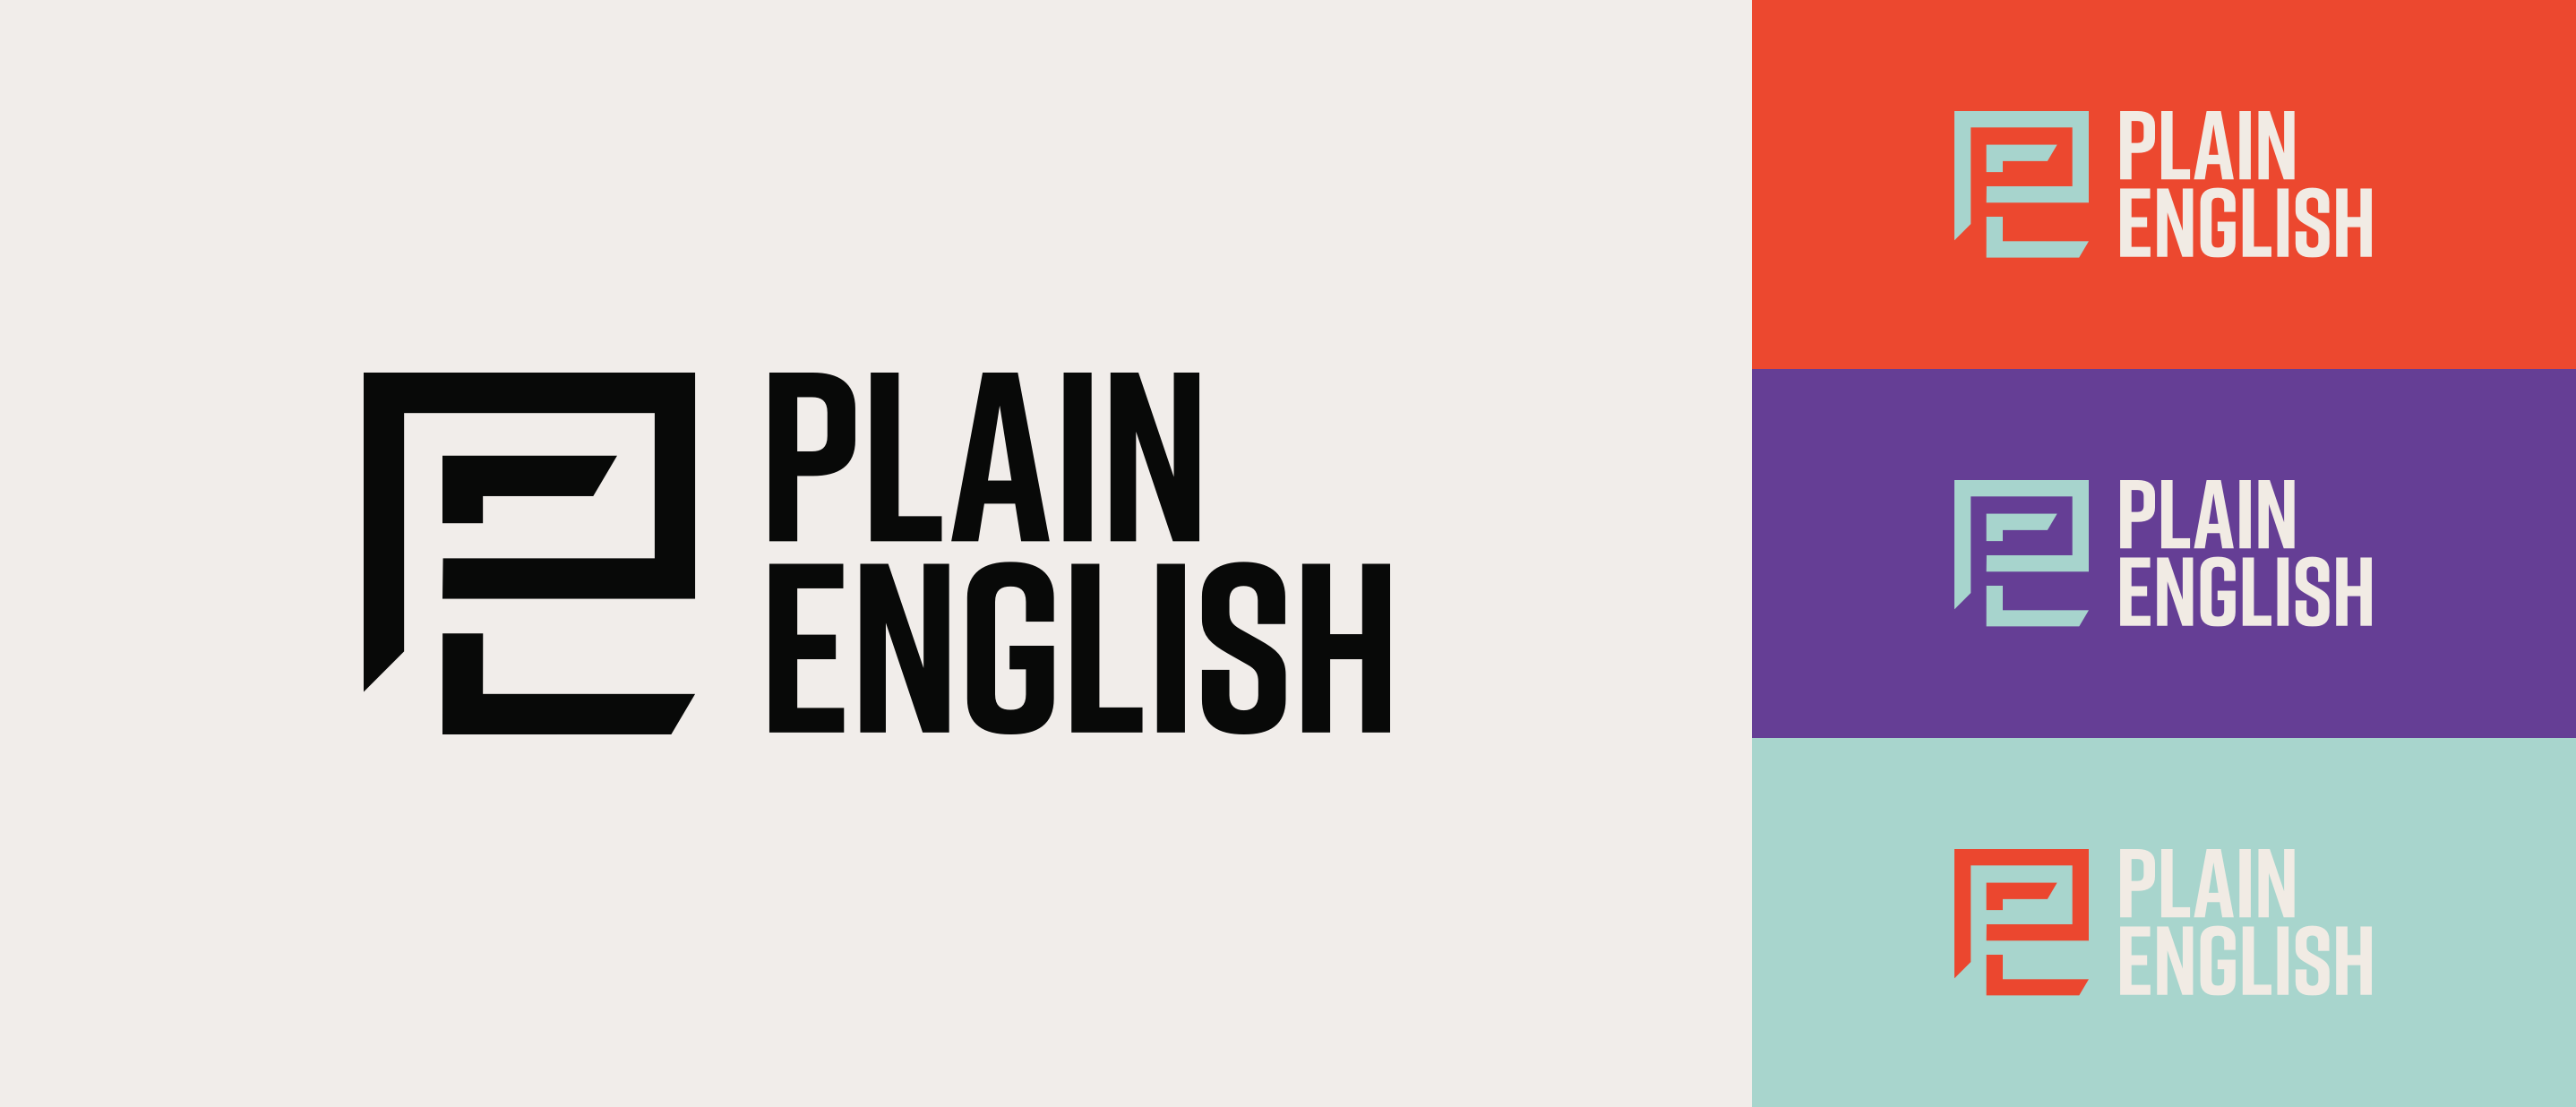 Plain English Logos